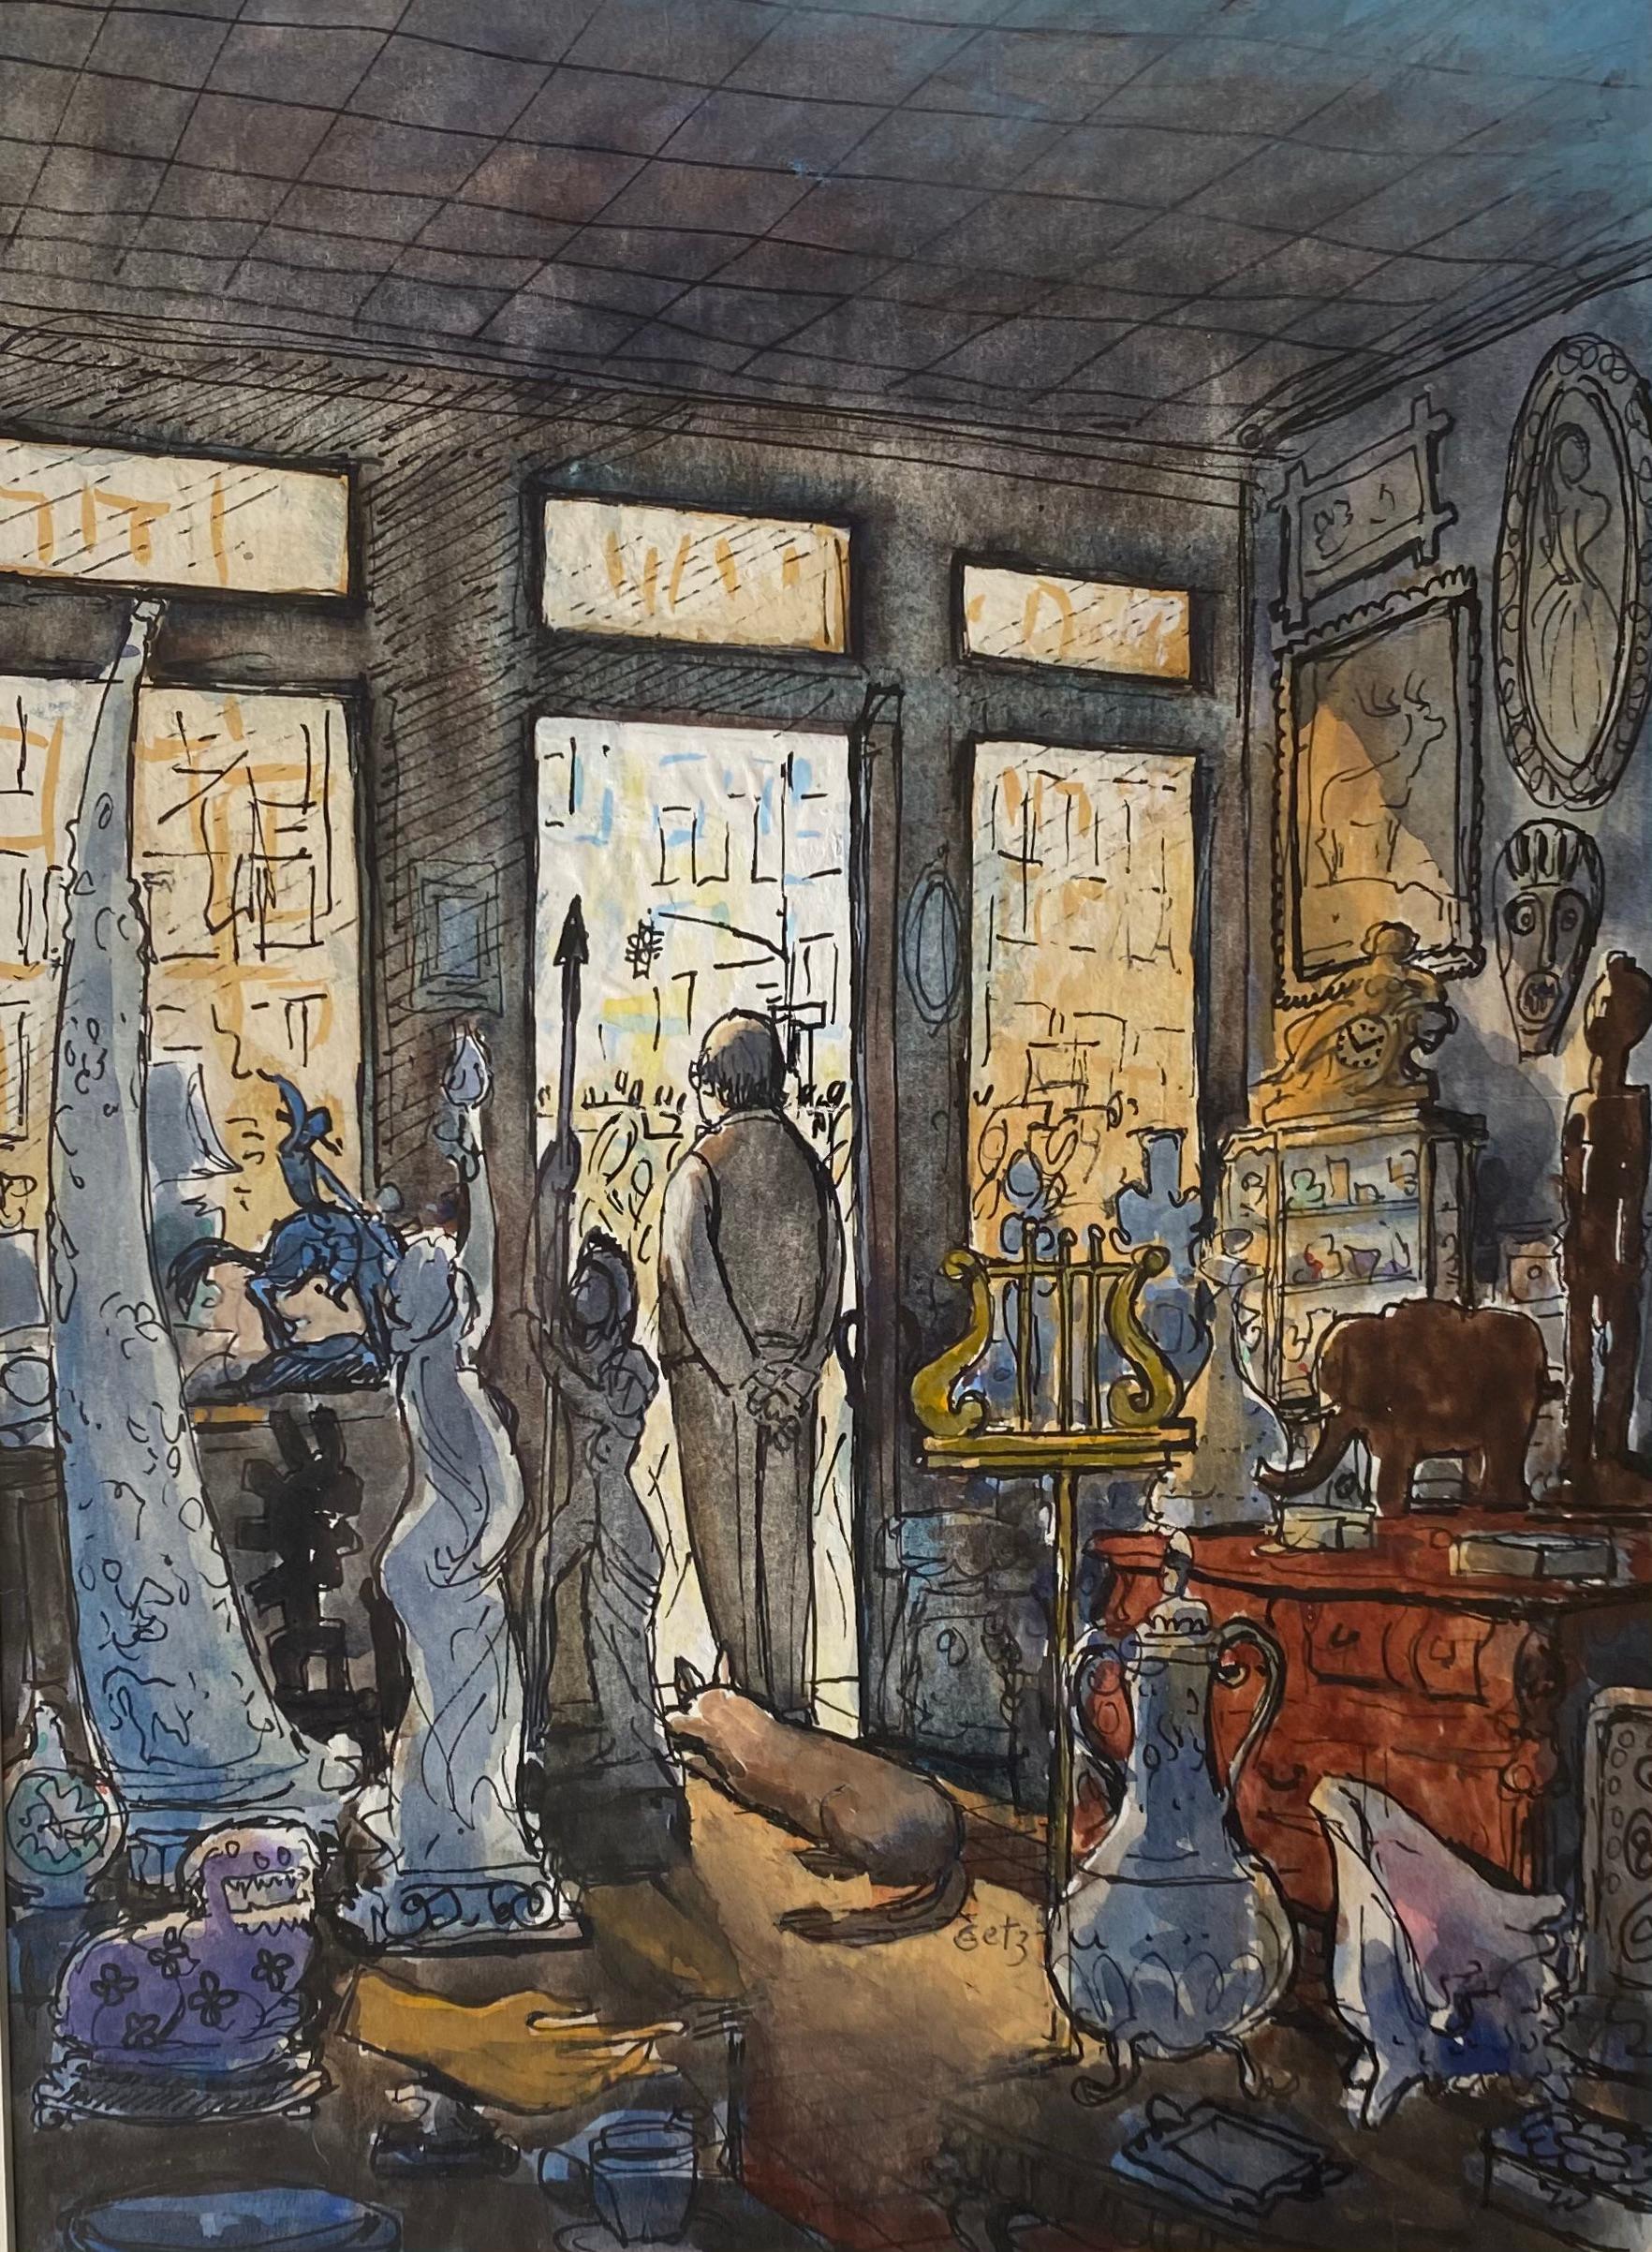 New Yorker Illustration Mid-Century Modern Realism American Scene "Antique Shop"